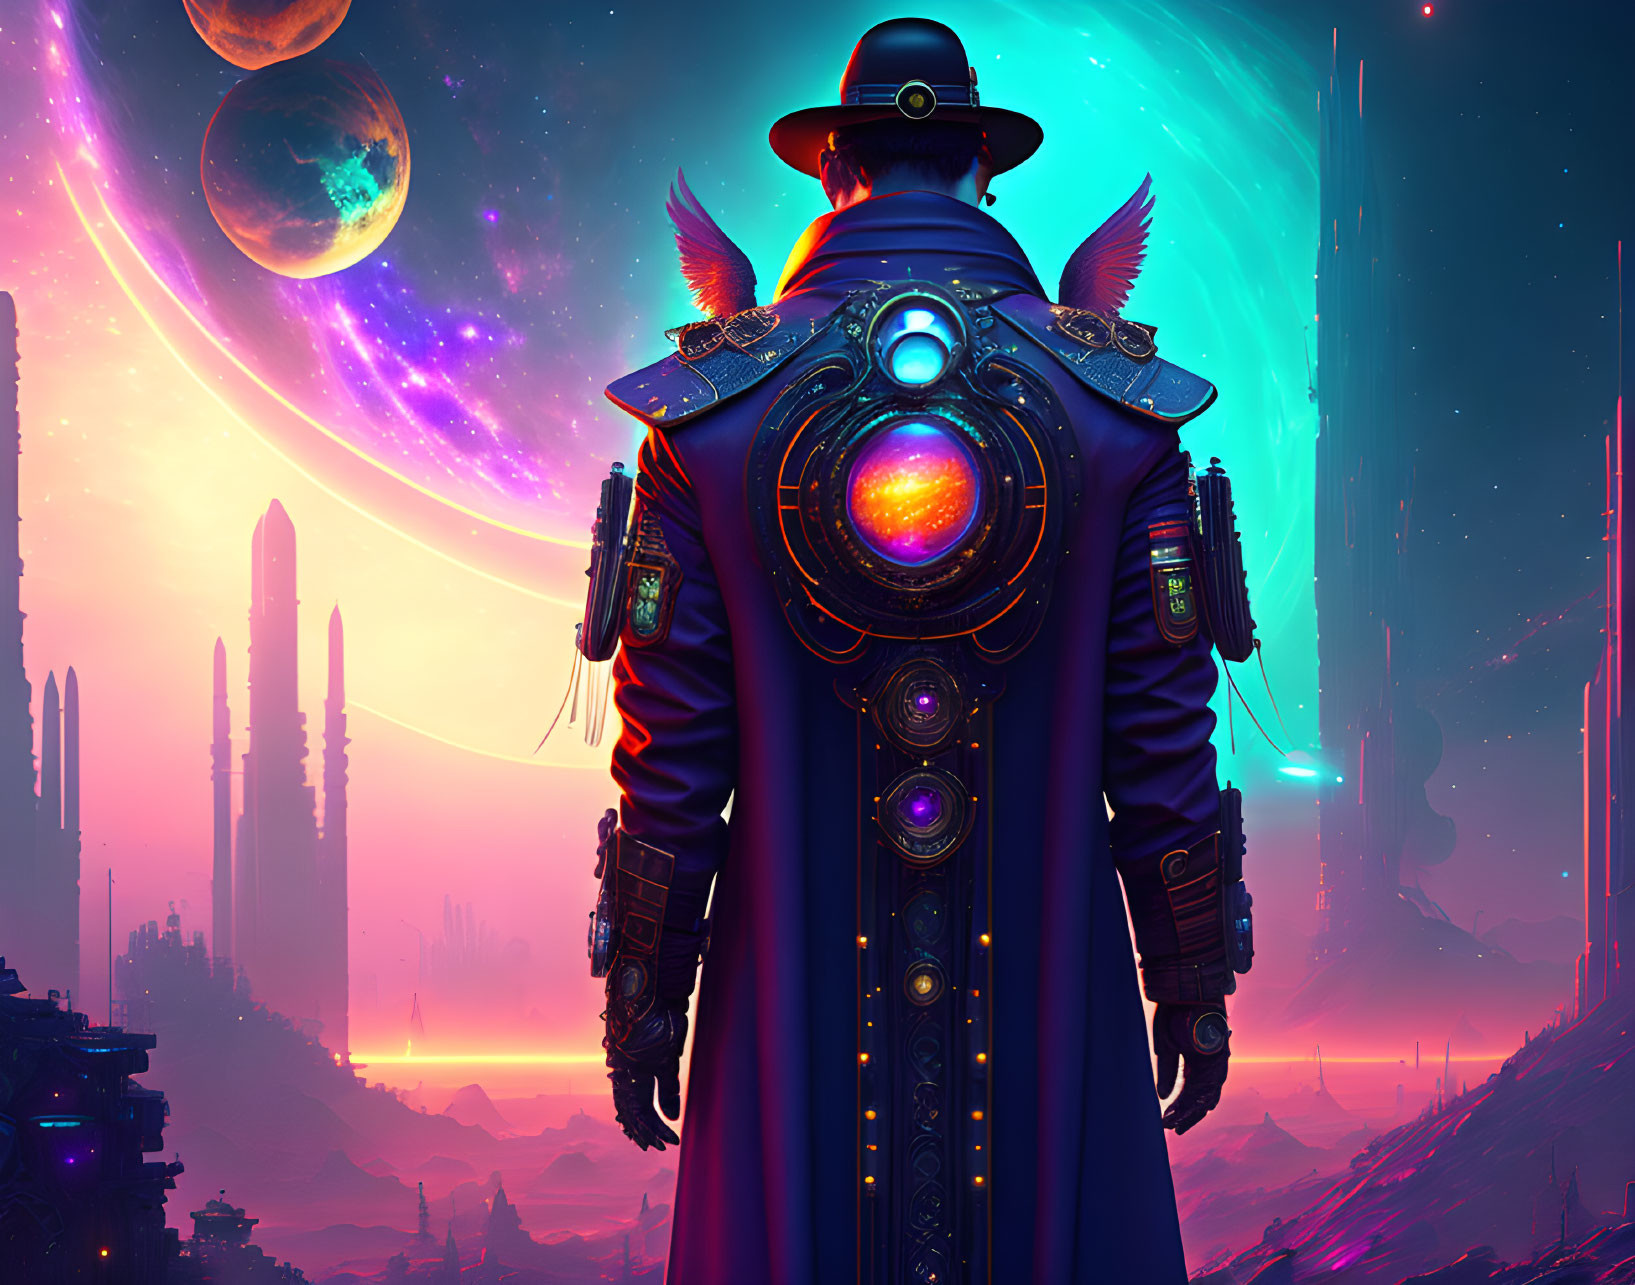 Futuristic figure in ornate coat and hat on vibrant alien landscape